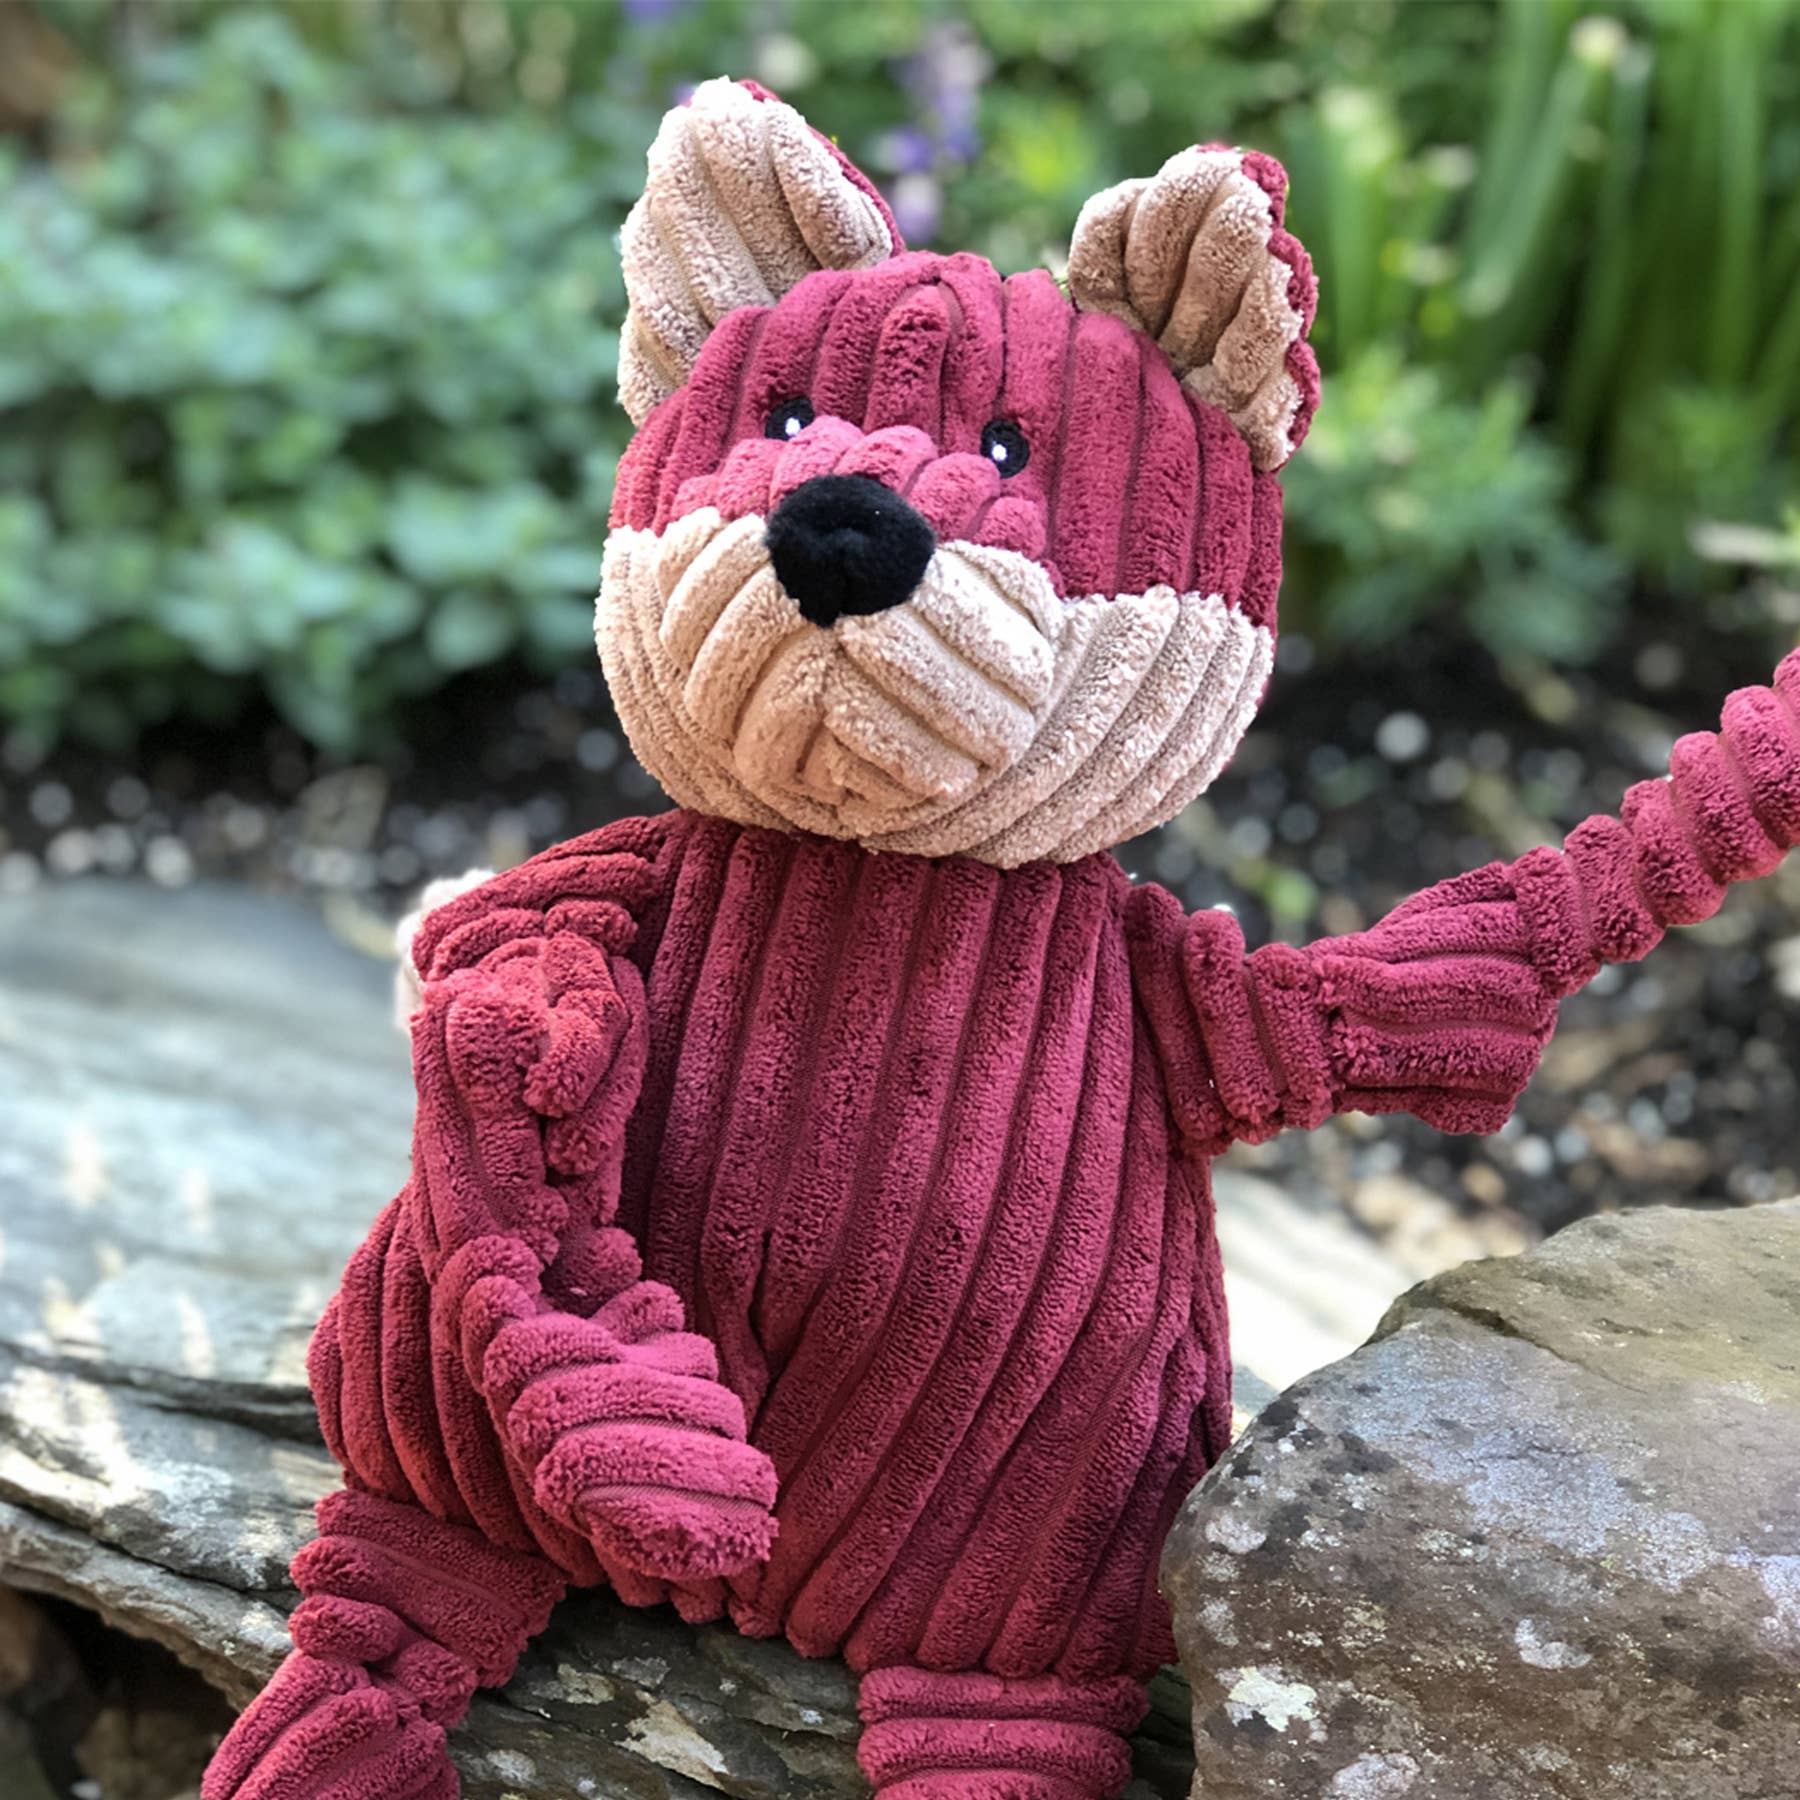 HuggleHounds - Sly Fox Knottie® Plush Dog Toy: Large